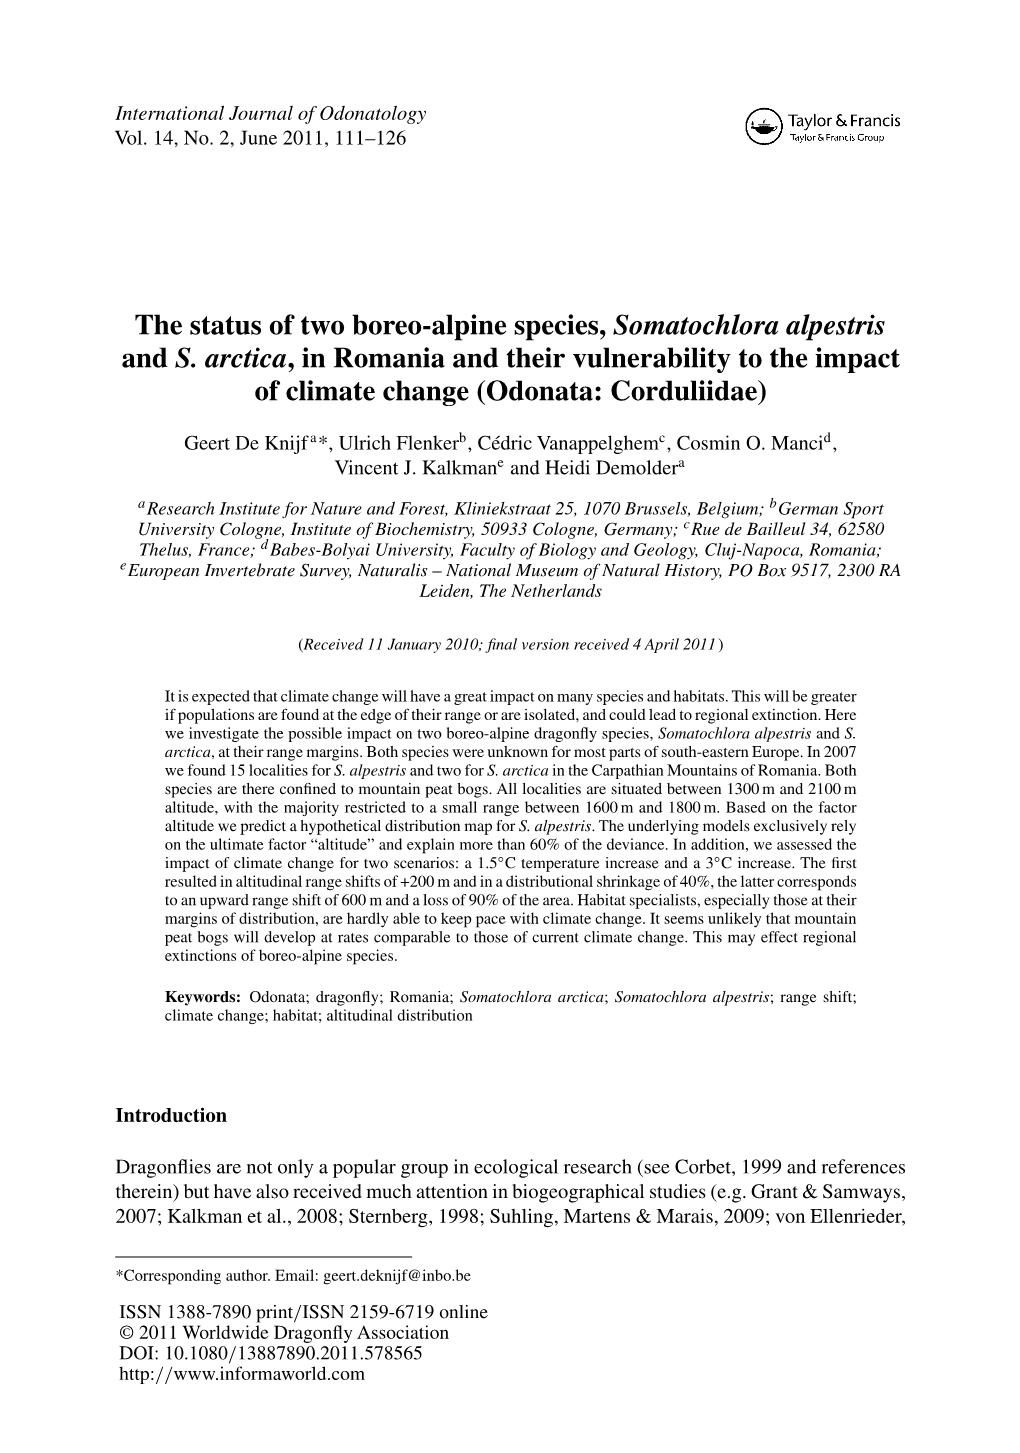 The Status of Two Boreo-Alpine Species, Somatochlora Alpestris and S